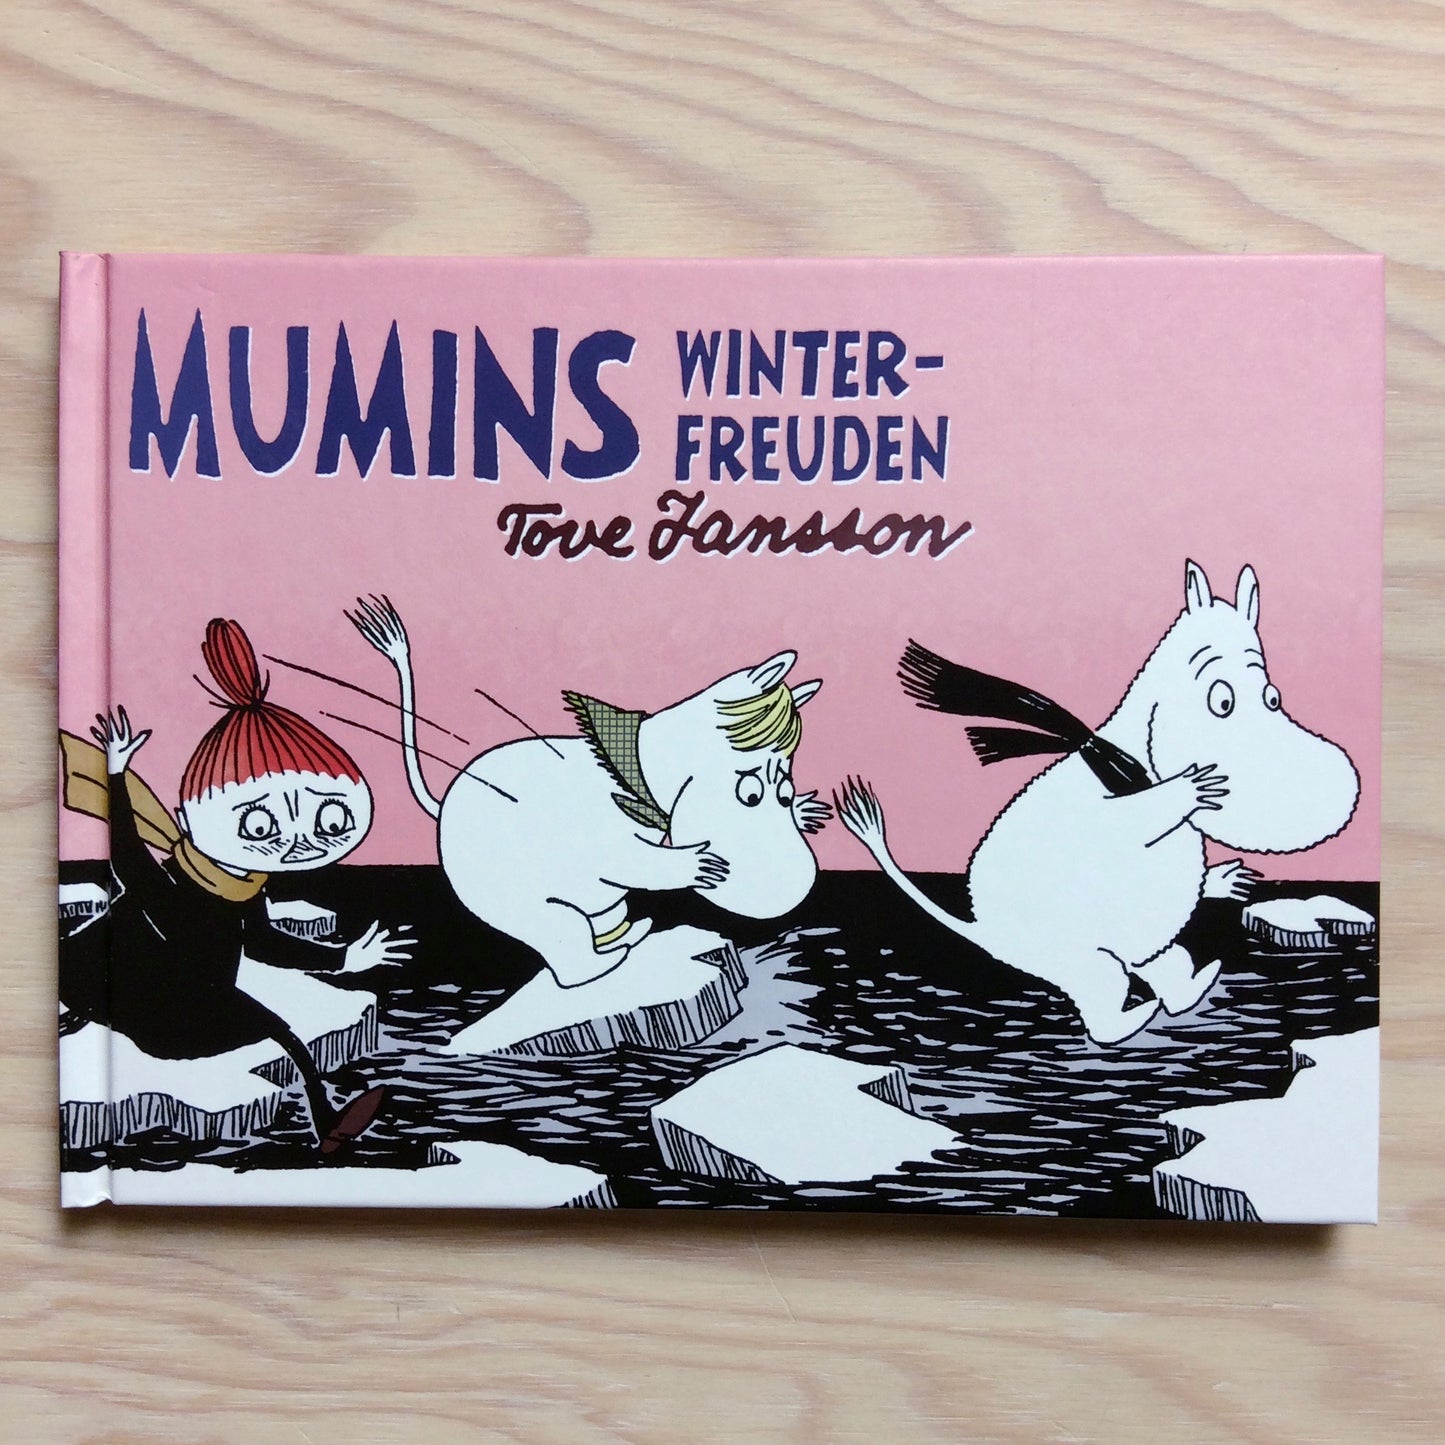 Mumins Winterfreuden